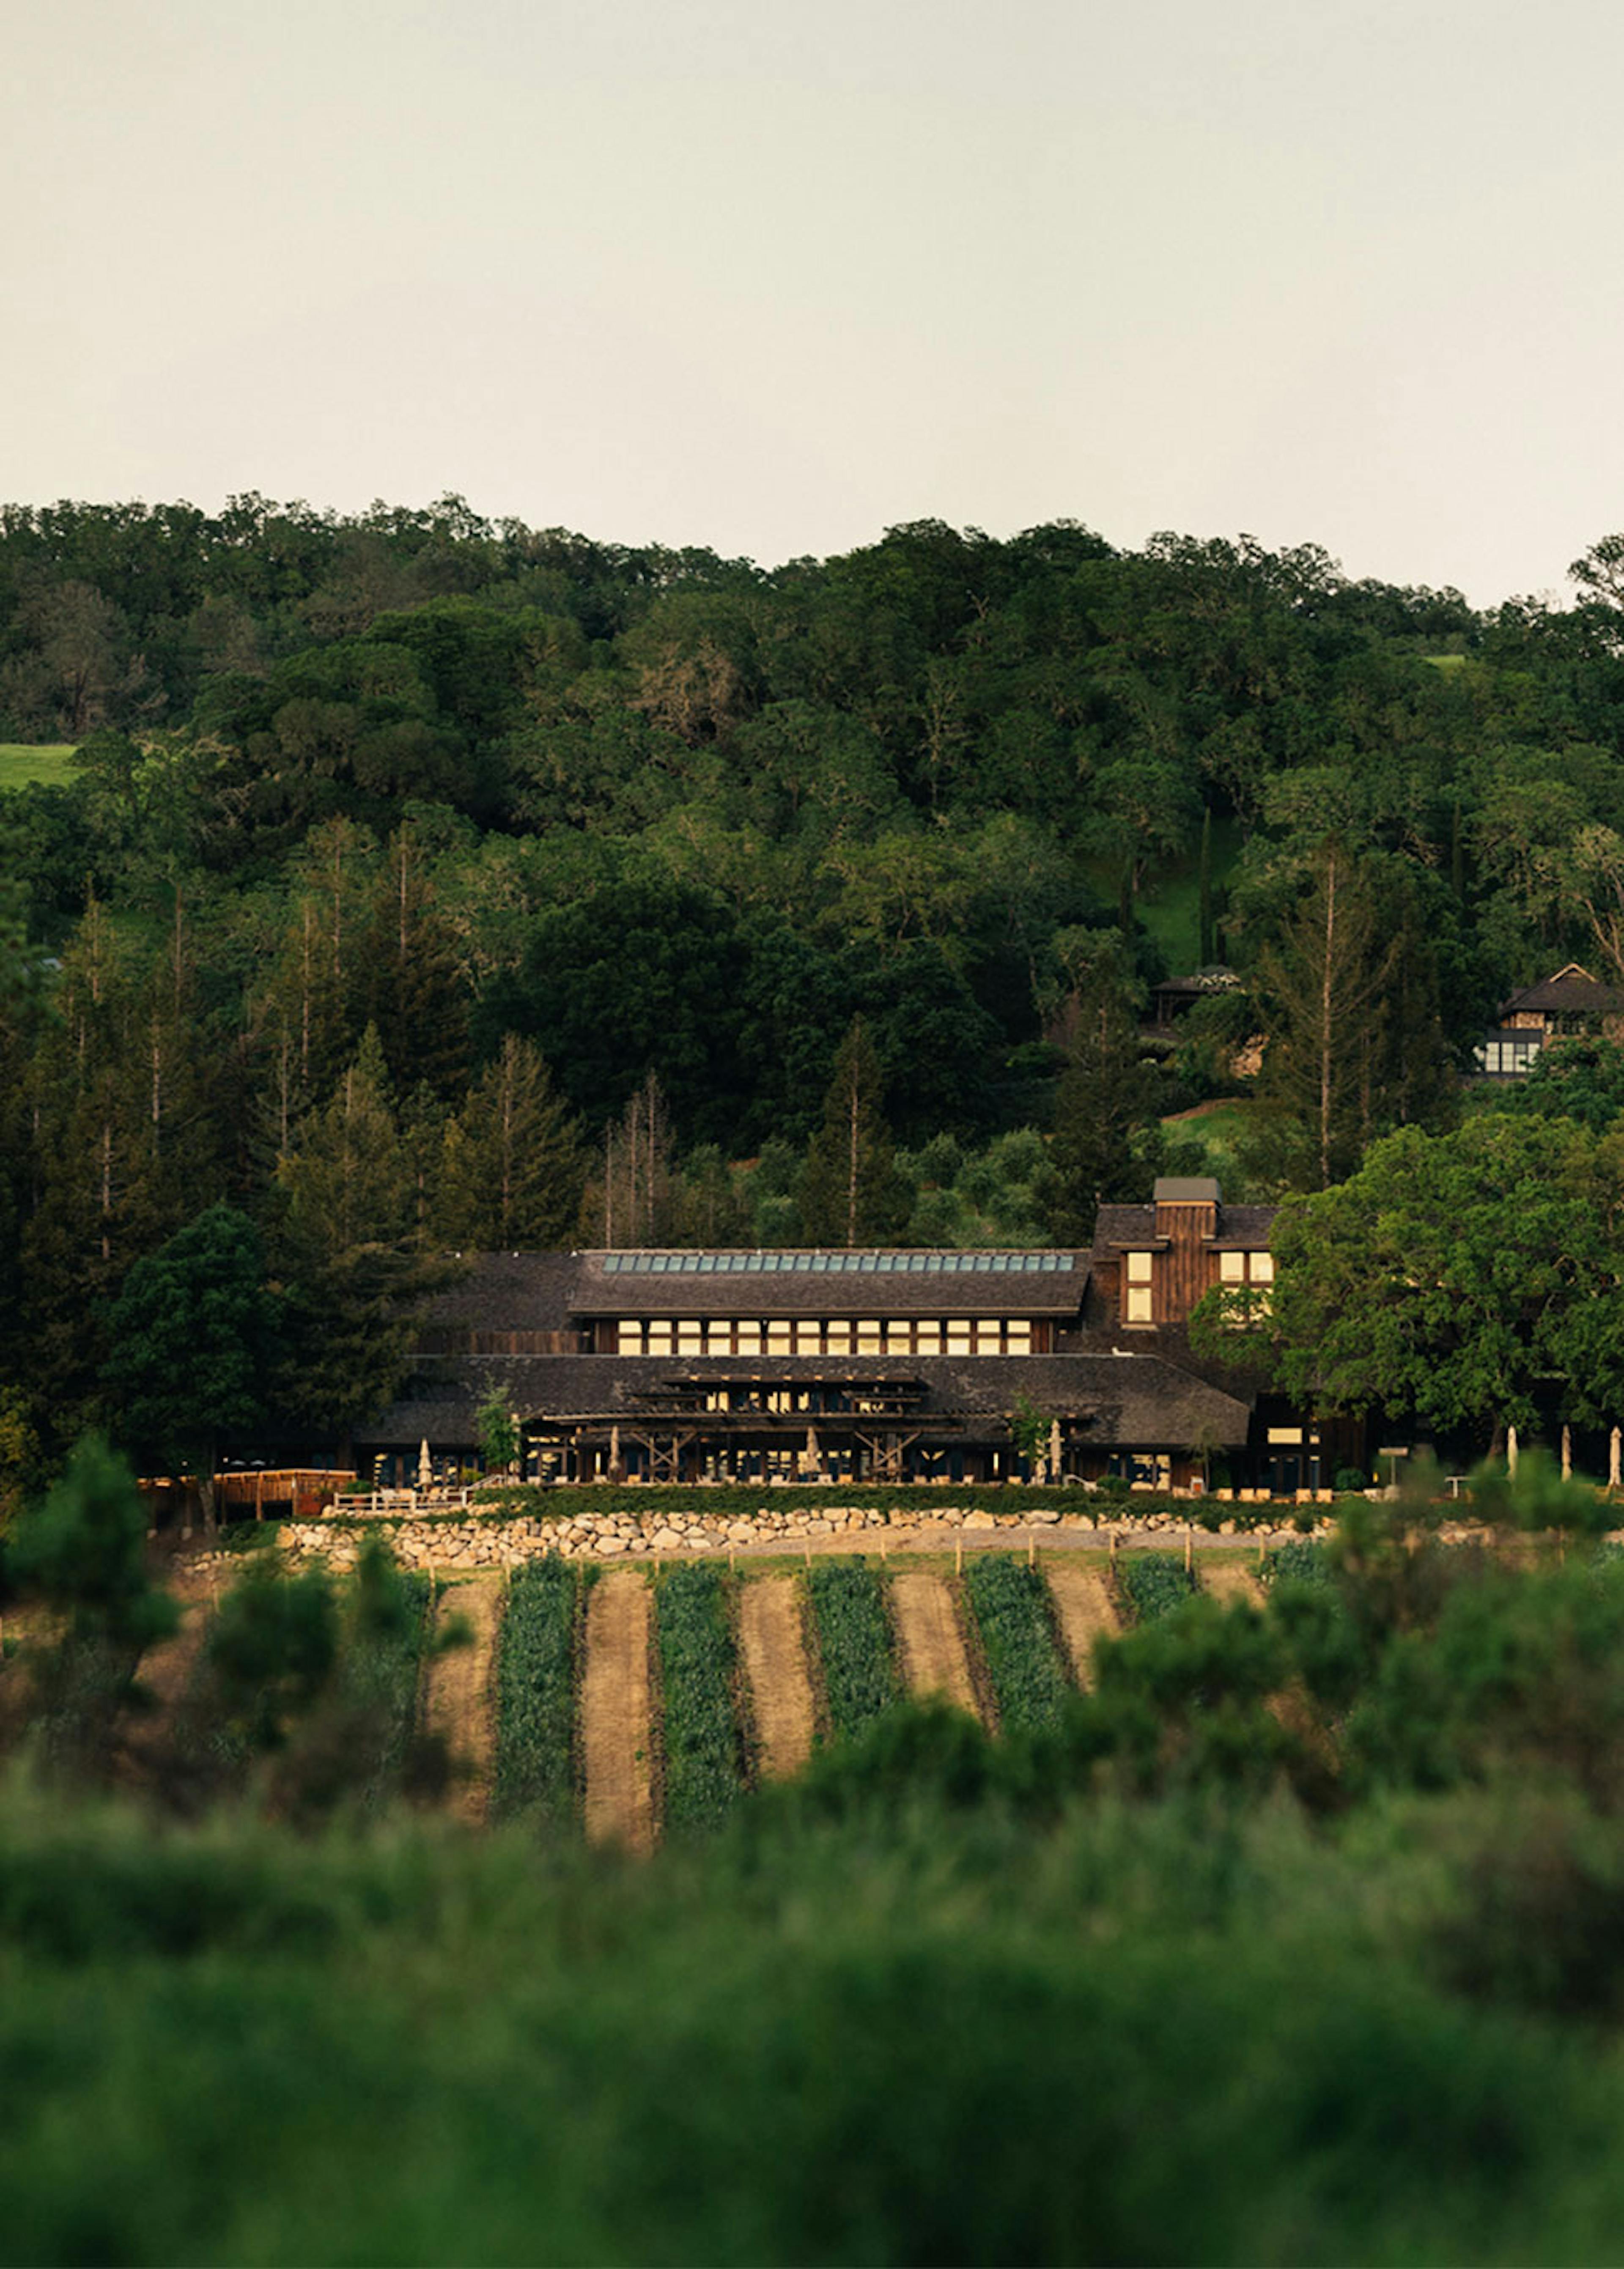 The Joseph Phelps winery in Napa Valley designed by architect John Marsh Davis